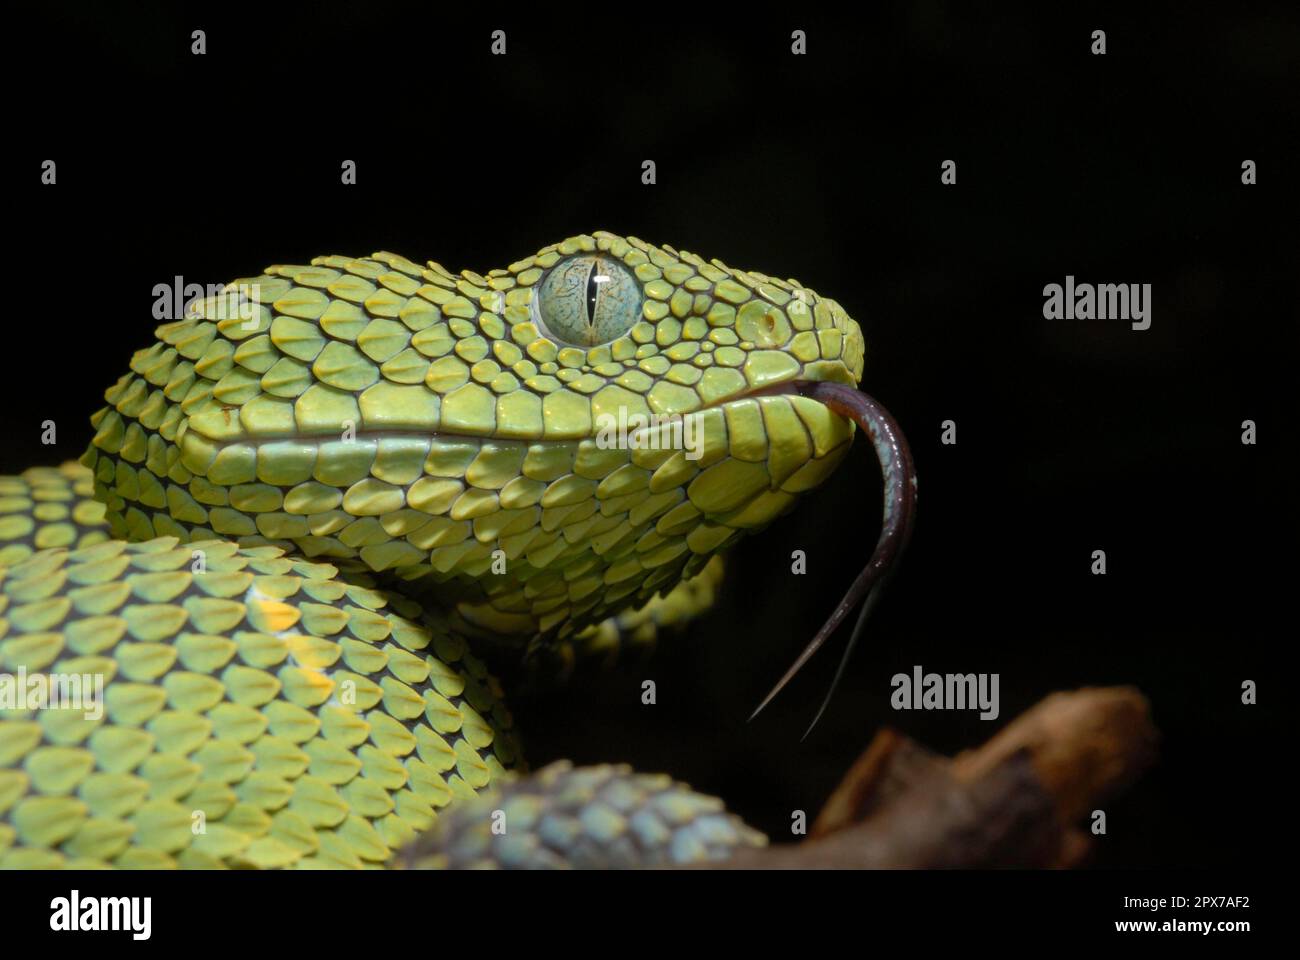 Green Bush Viper, Image & Photo (Free Trial)